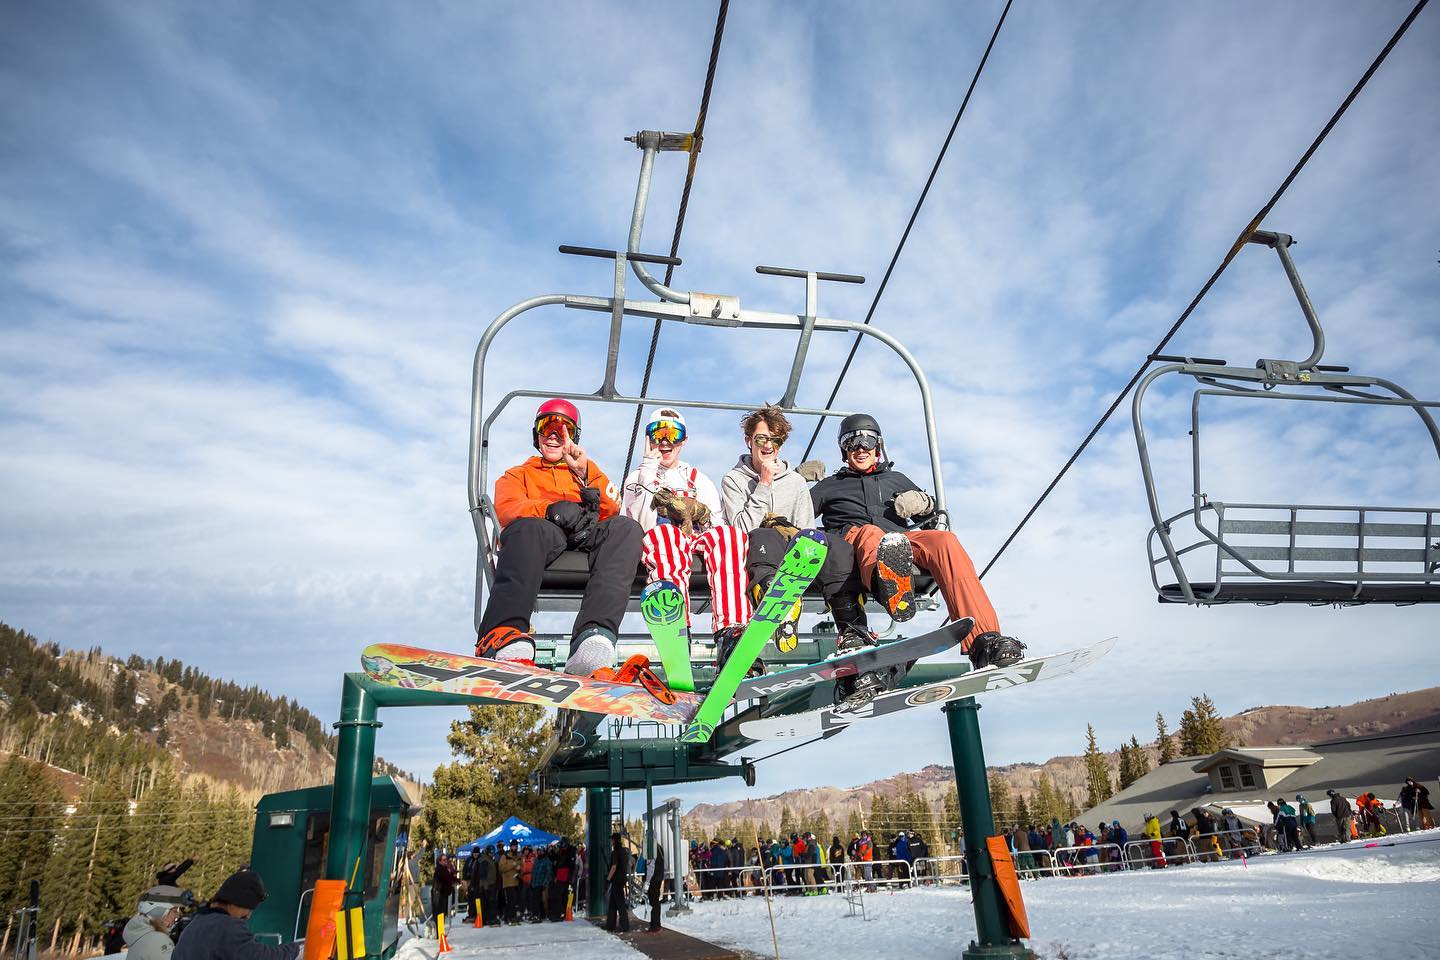 Utah Receives A Record Number of Skier Visits (7.1 Million Visitations)